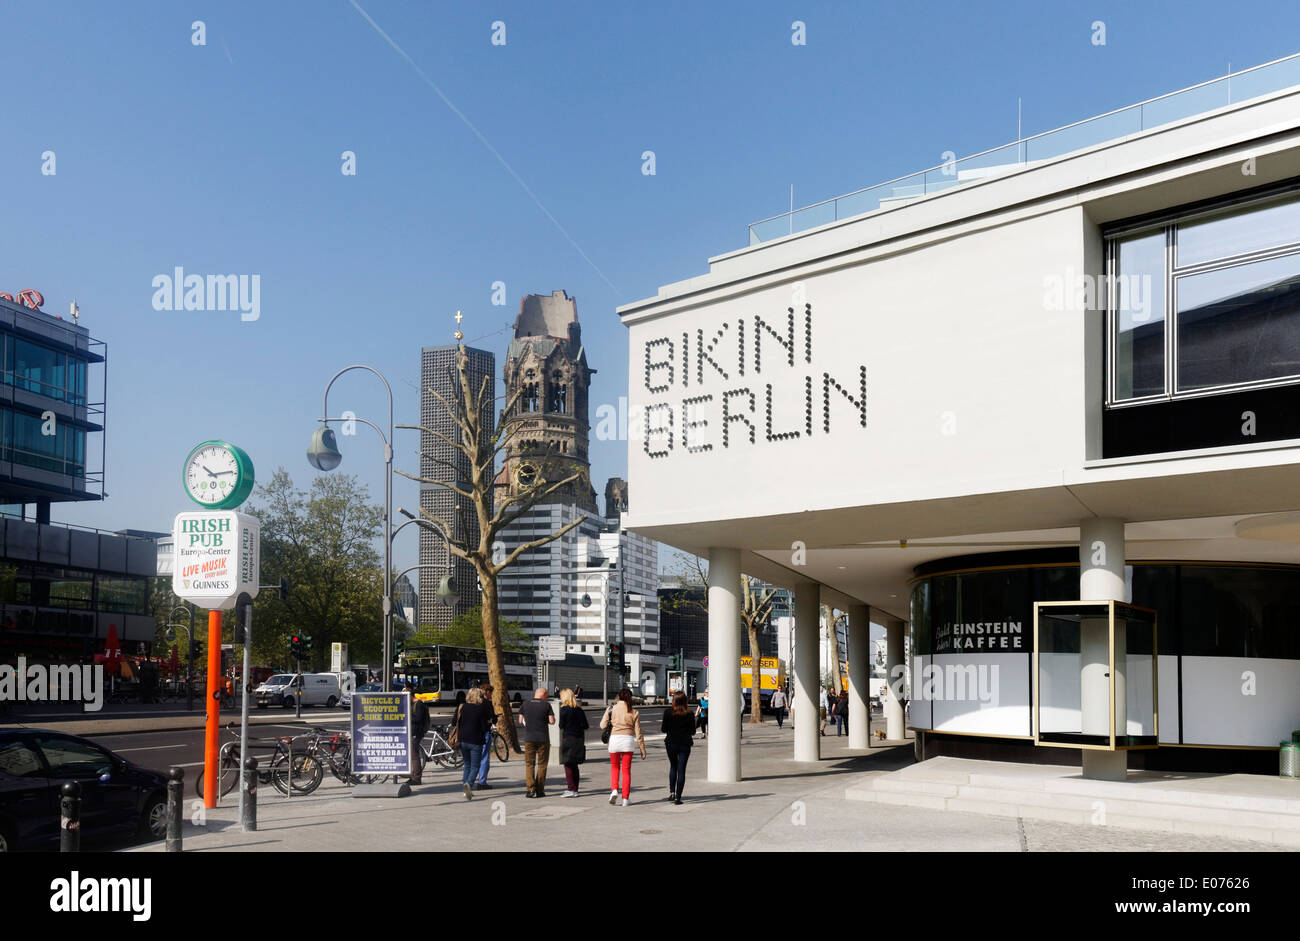 The brand new Bikini Berlin shopping mall in Berlin, Germany Stock Photo